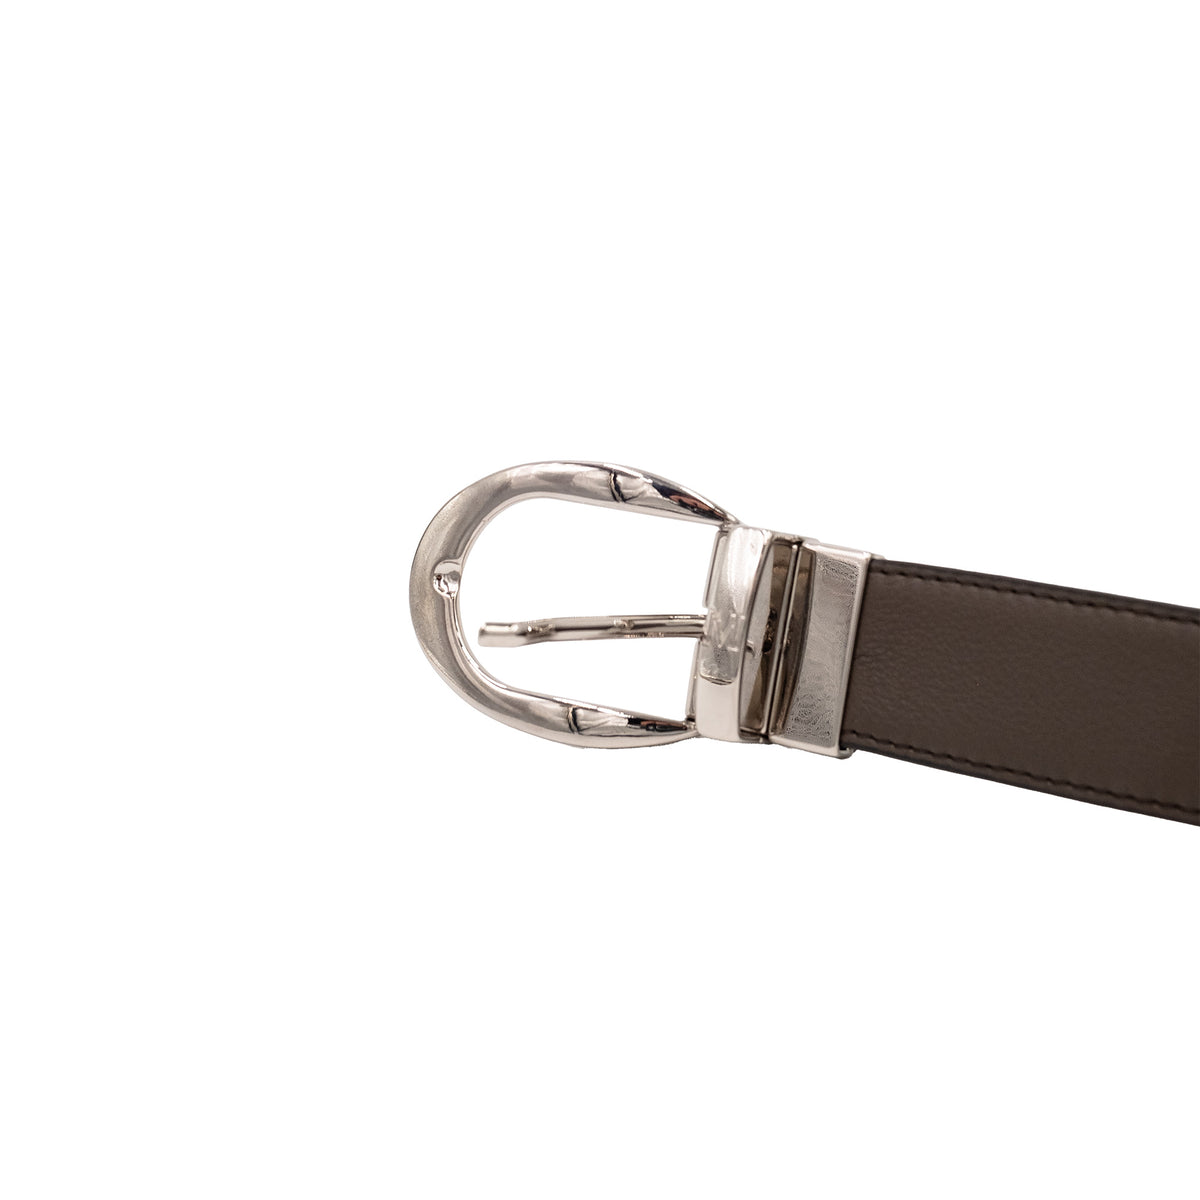 Reversible belt - black calfskin, brown suede – Maximilian Mogg